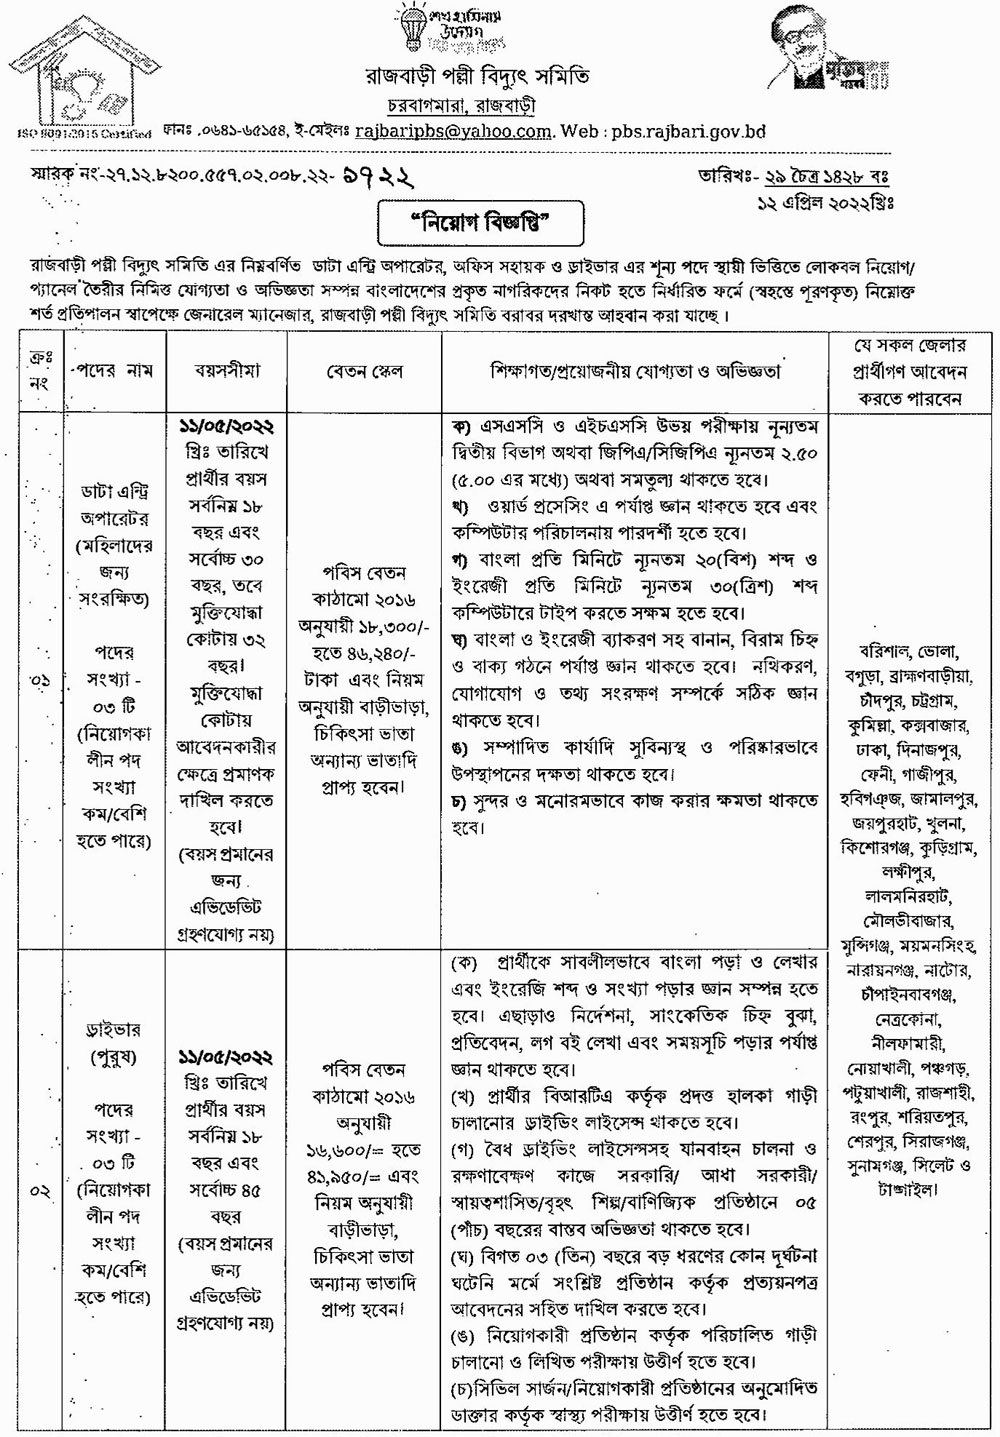 Rajbari District Palli Bidyut Samity Job Circular 2022